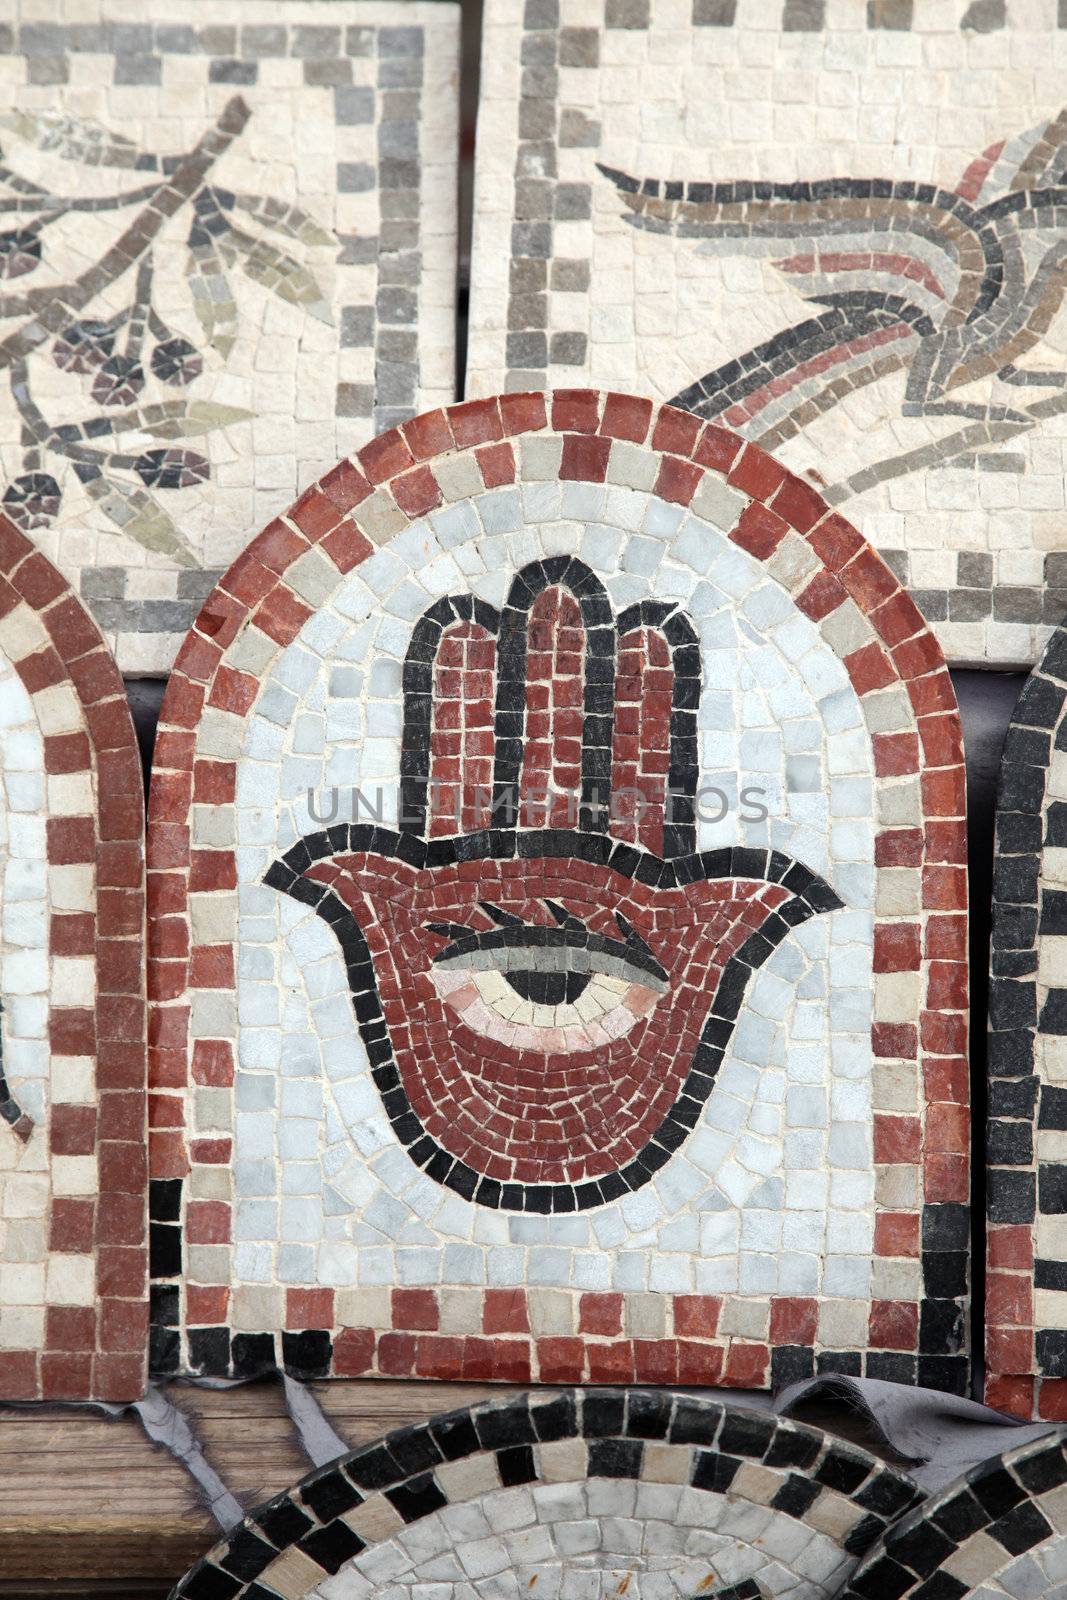 Fatima hand on the ceramic tile